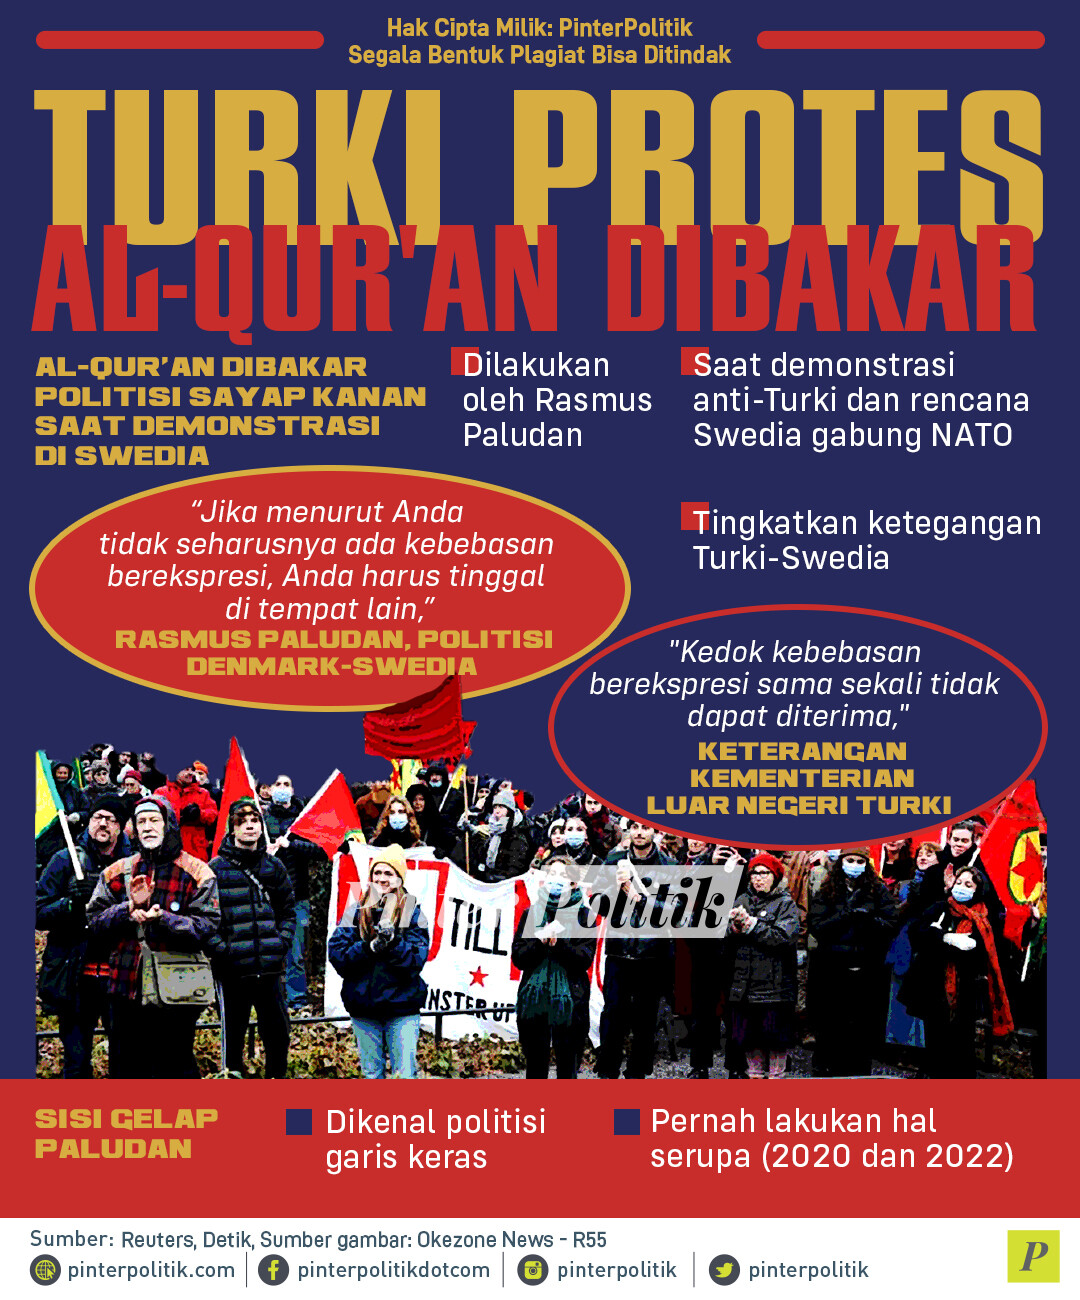 infografis turki protes al quran dibakar